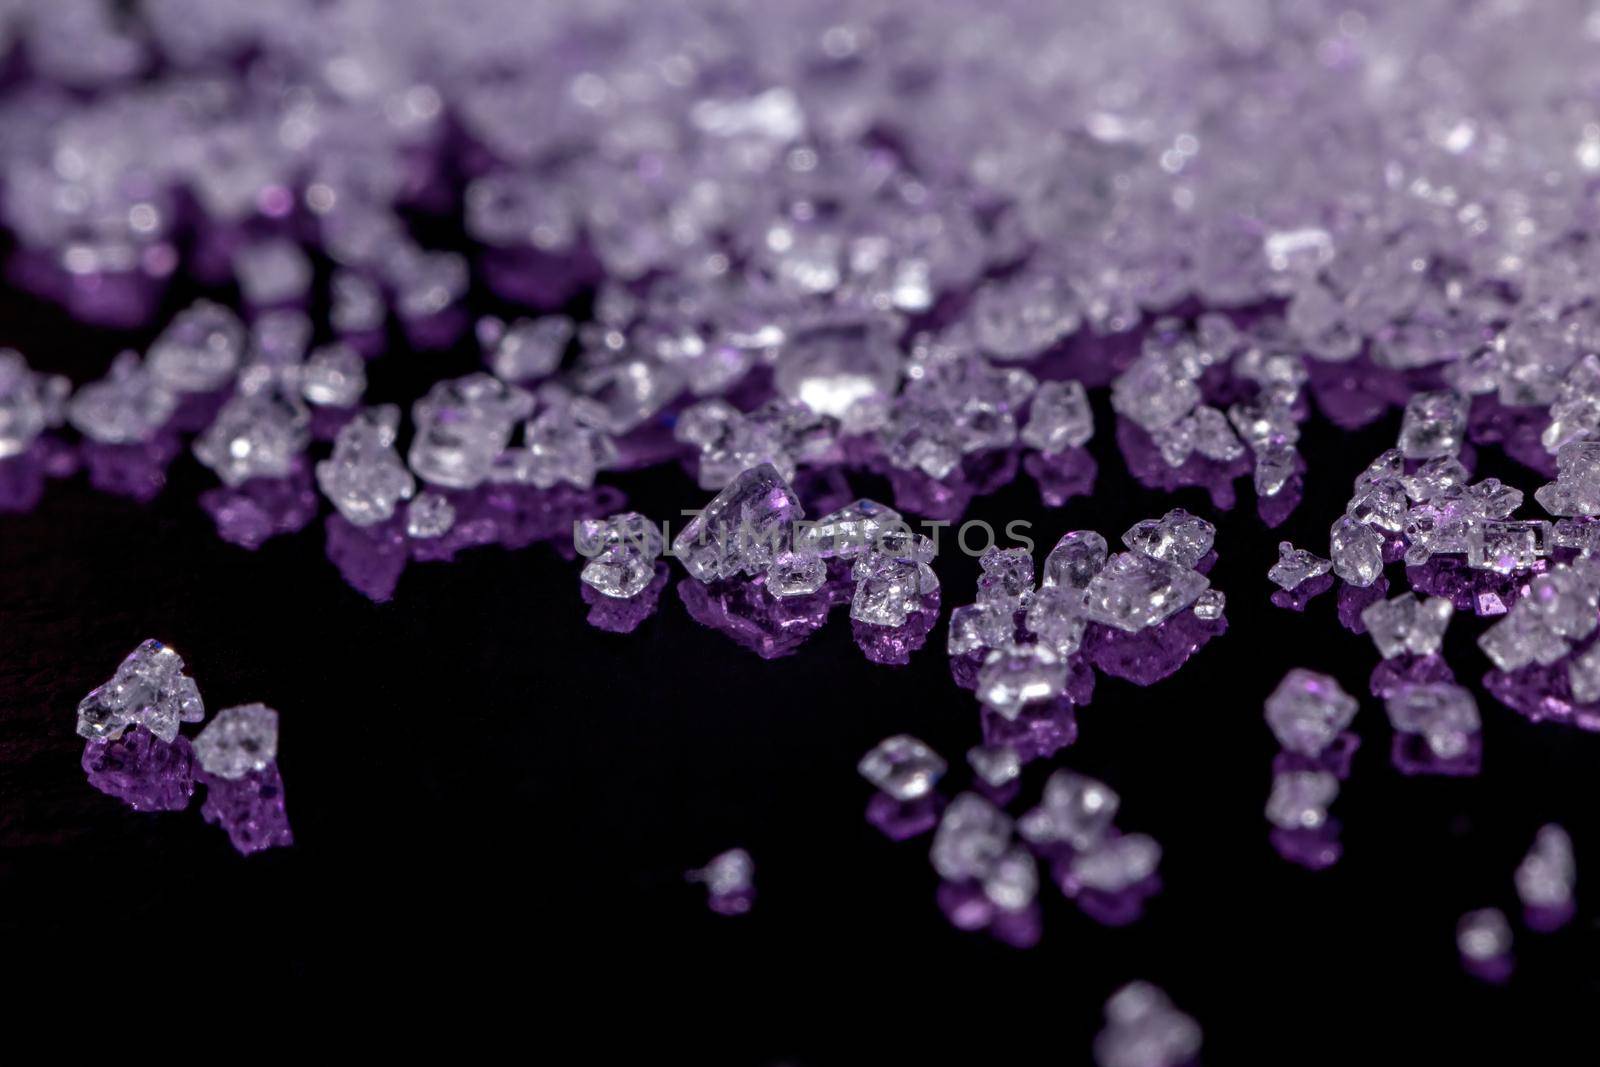 White sugar crystals on a dark violet background by clusterx